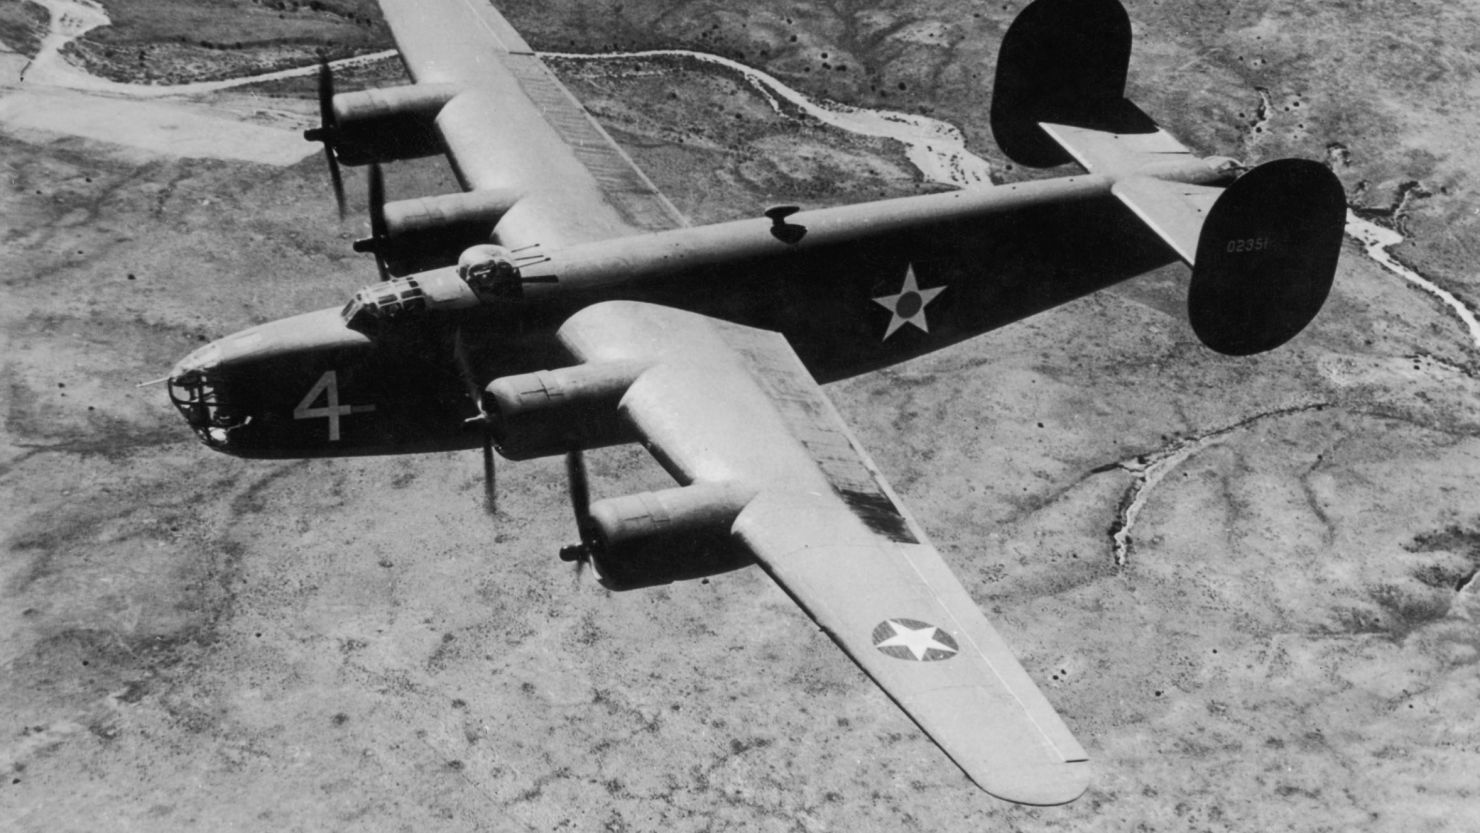 B-24 Liberator WW2 bomber